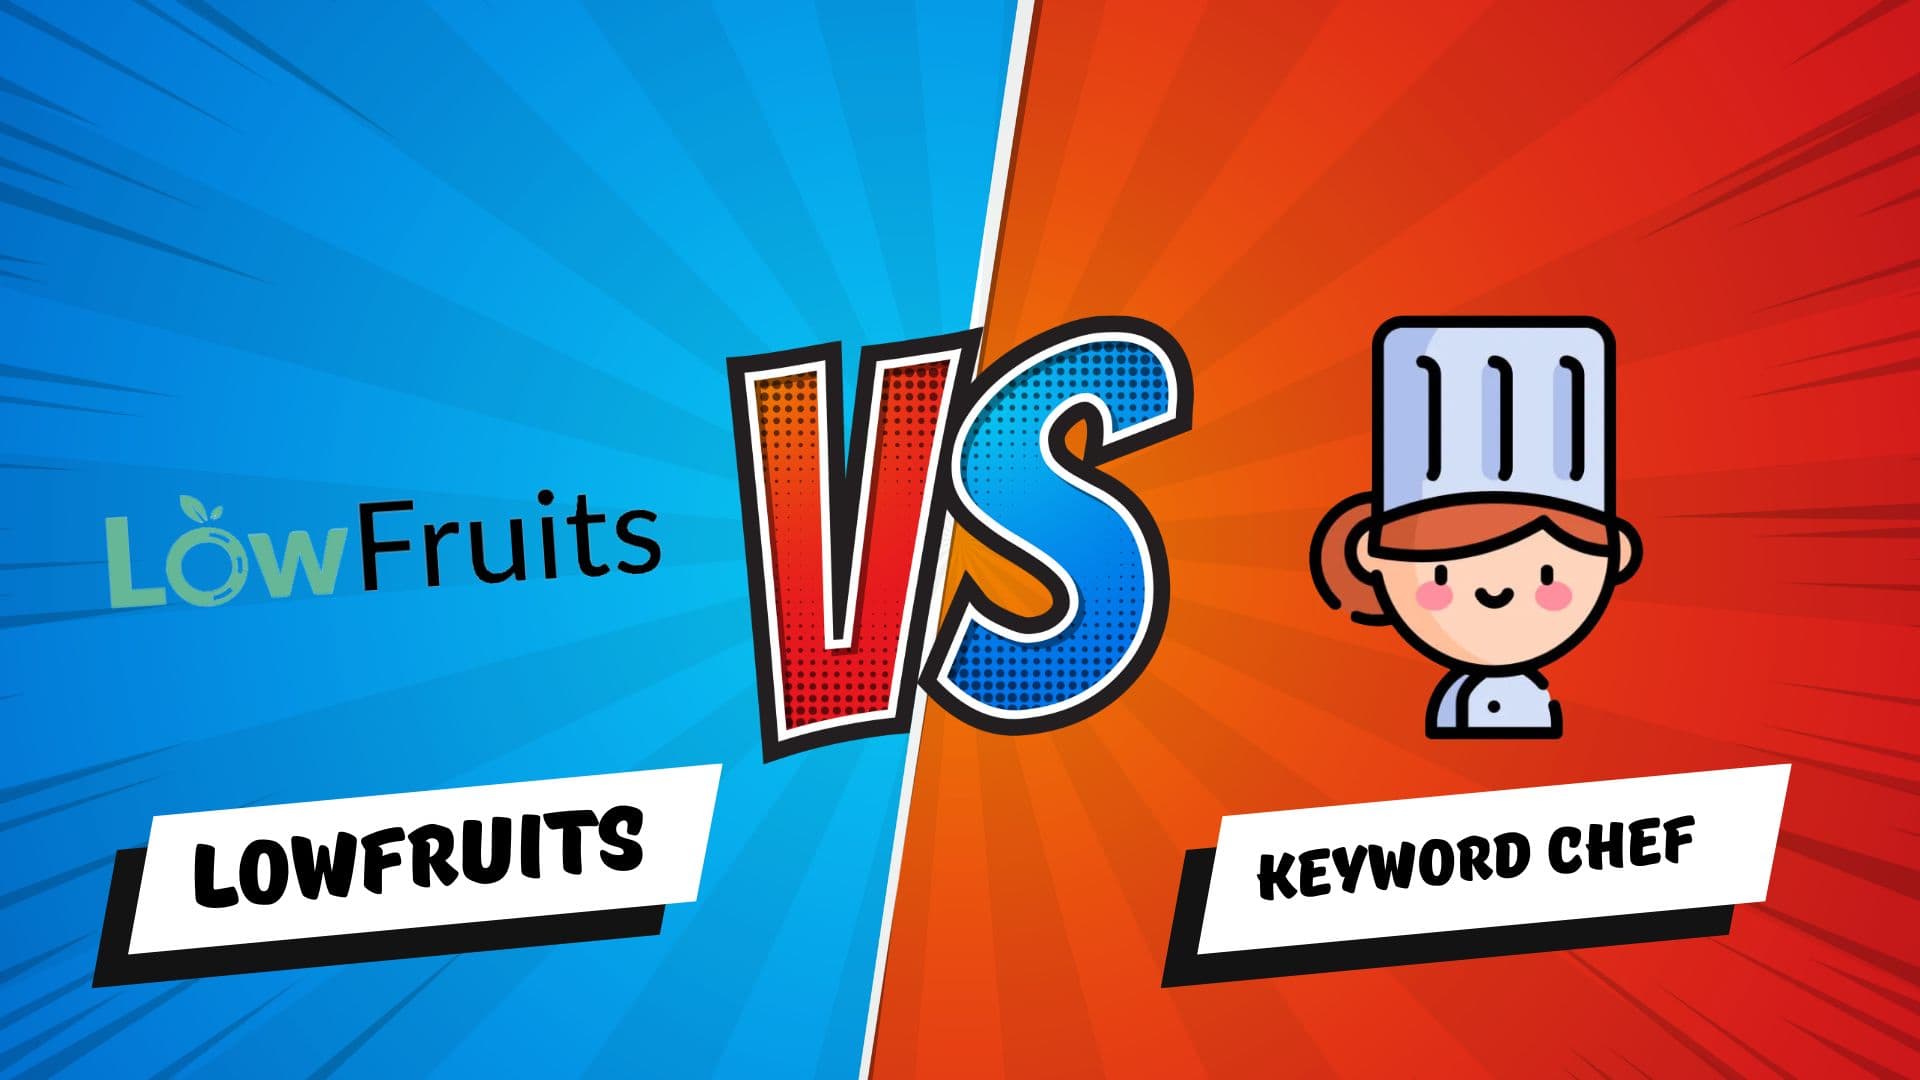 Lowfruits vs longfruits keyword chef.